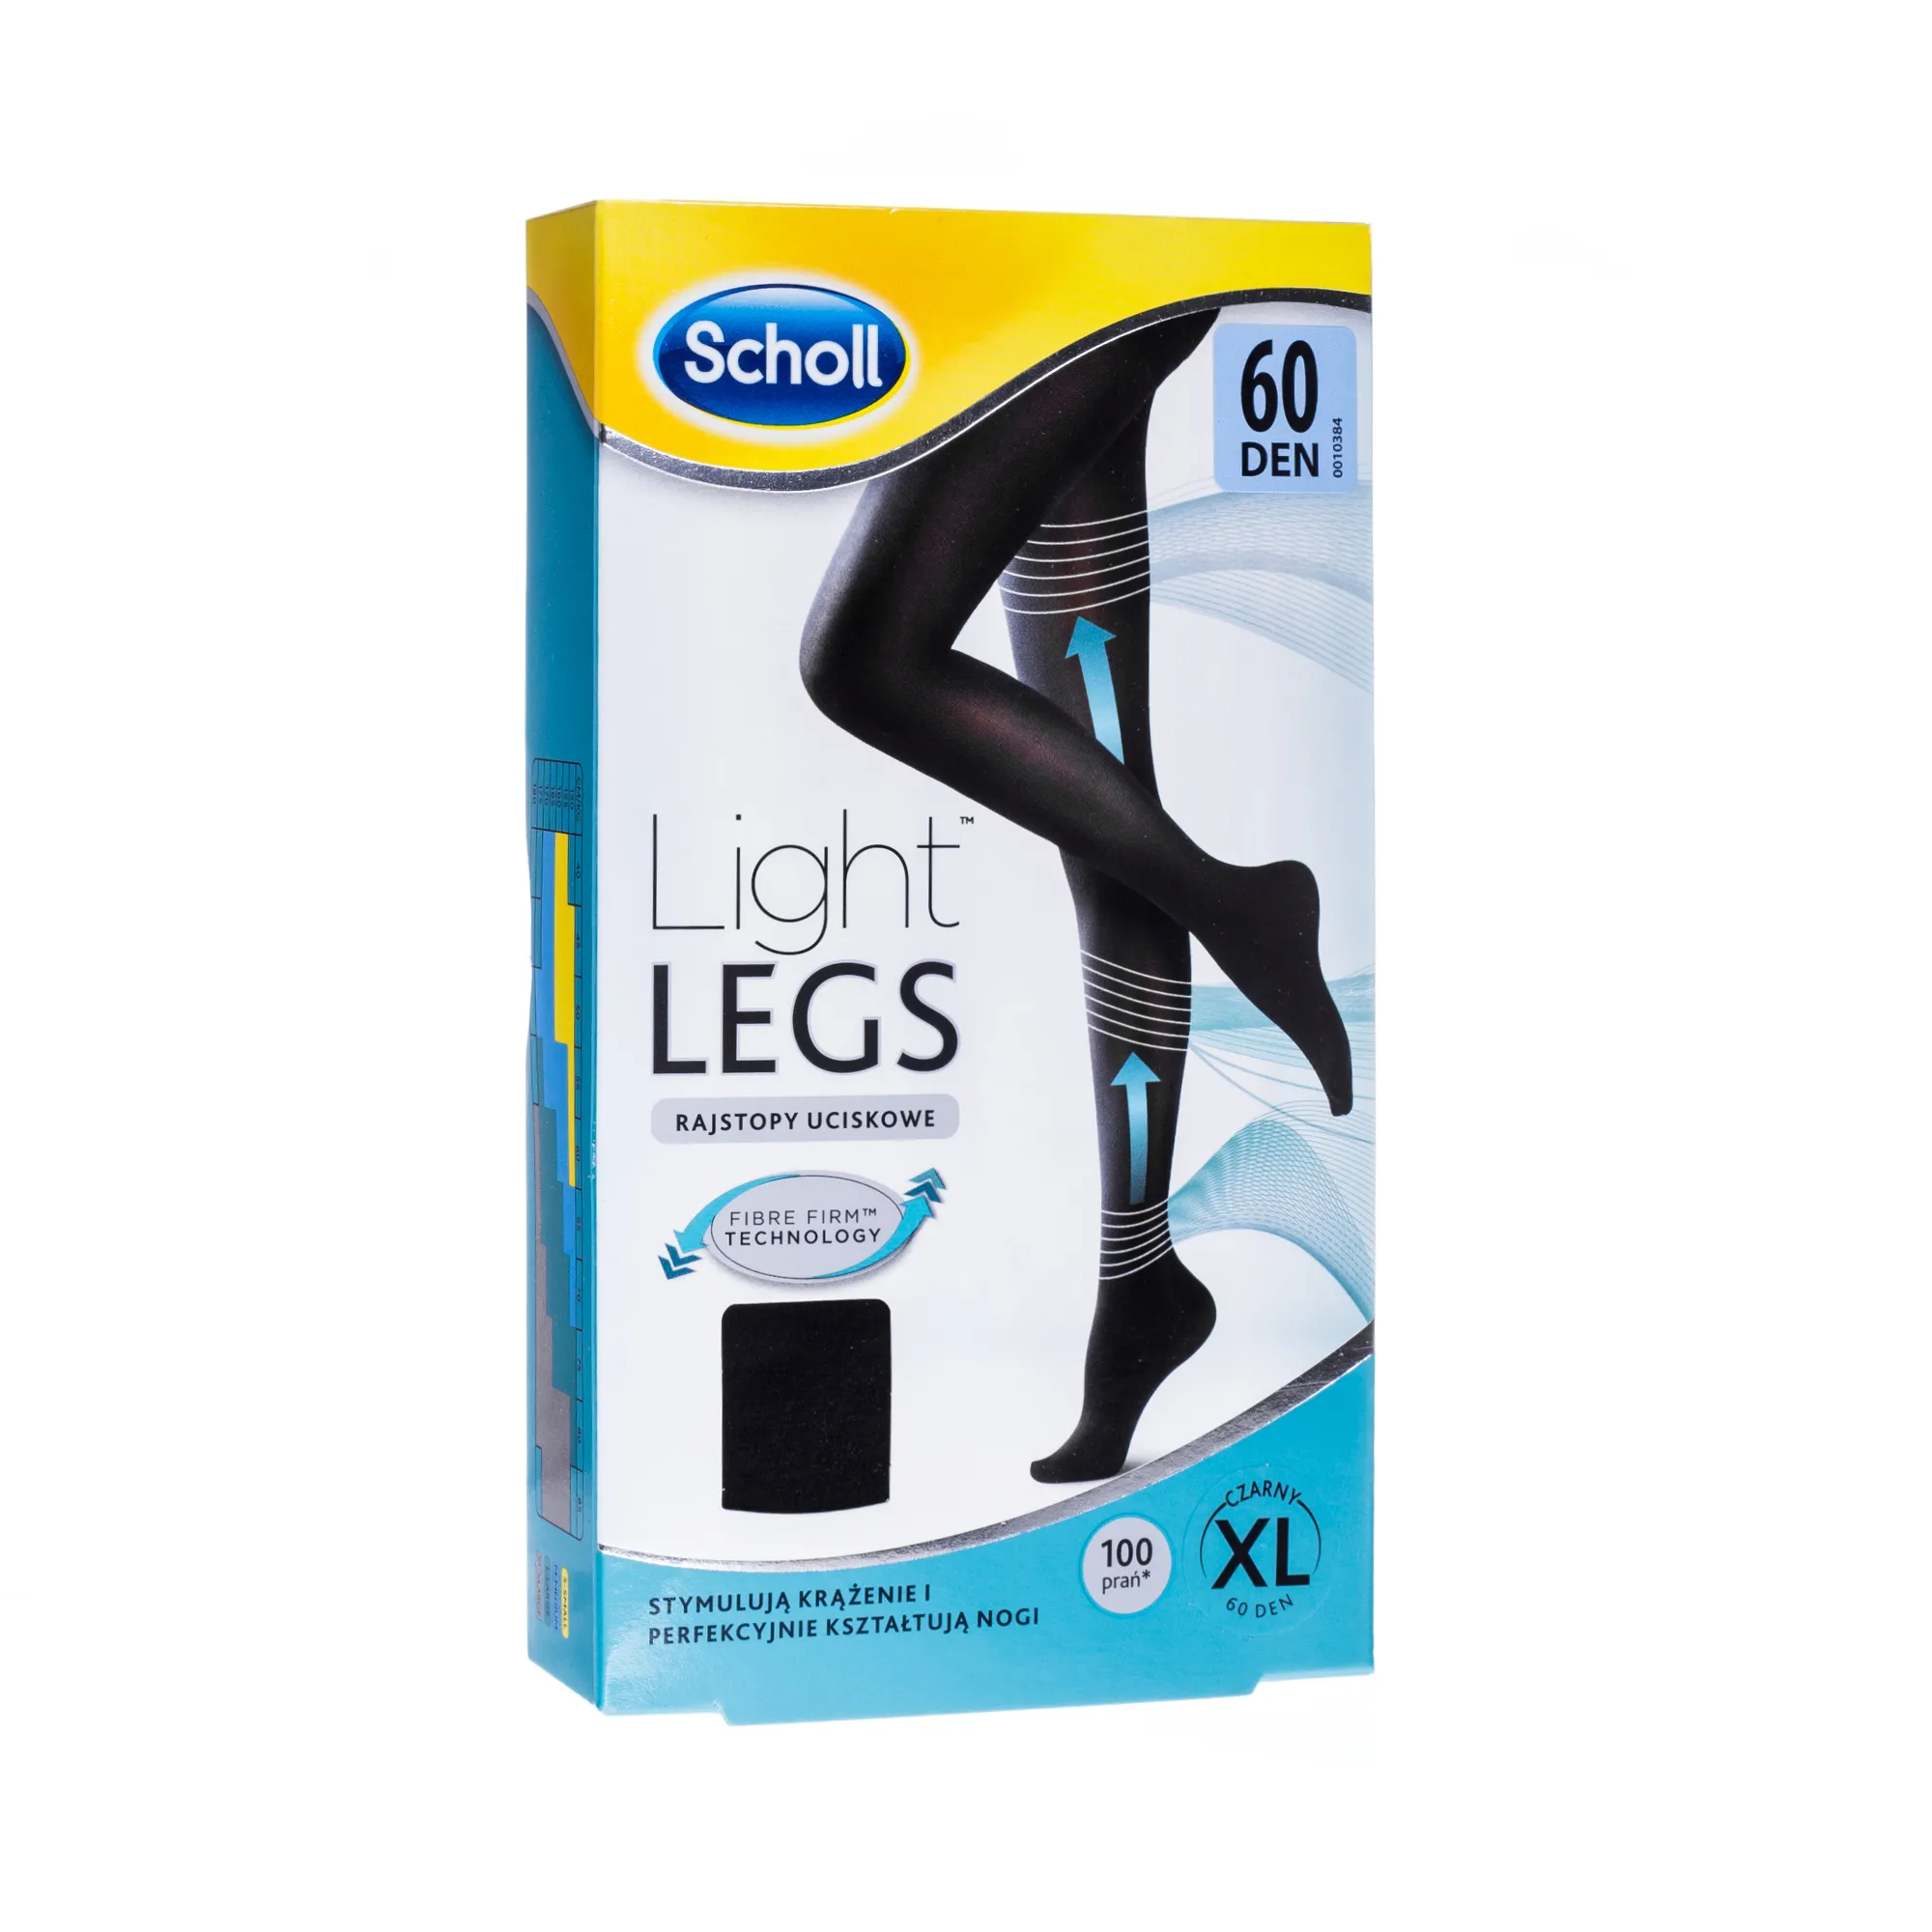 Scholl Light Legs, rajstopy uciskowe, czarne, 60 DEN, XL, 1 sztuka